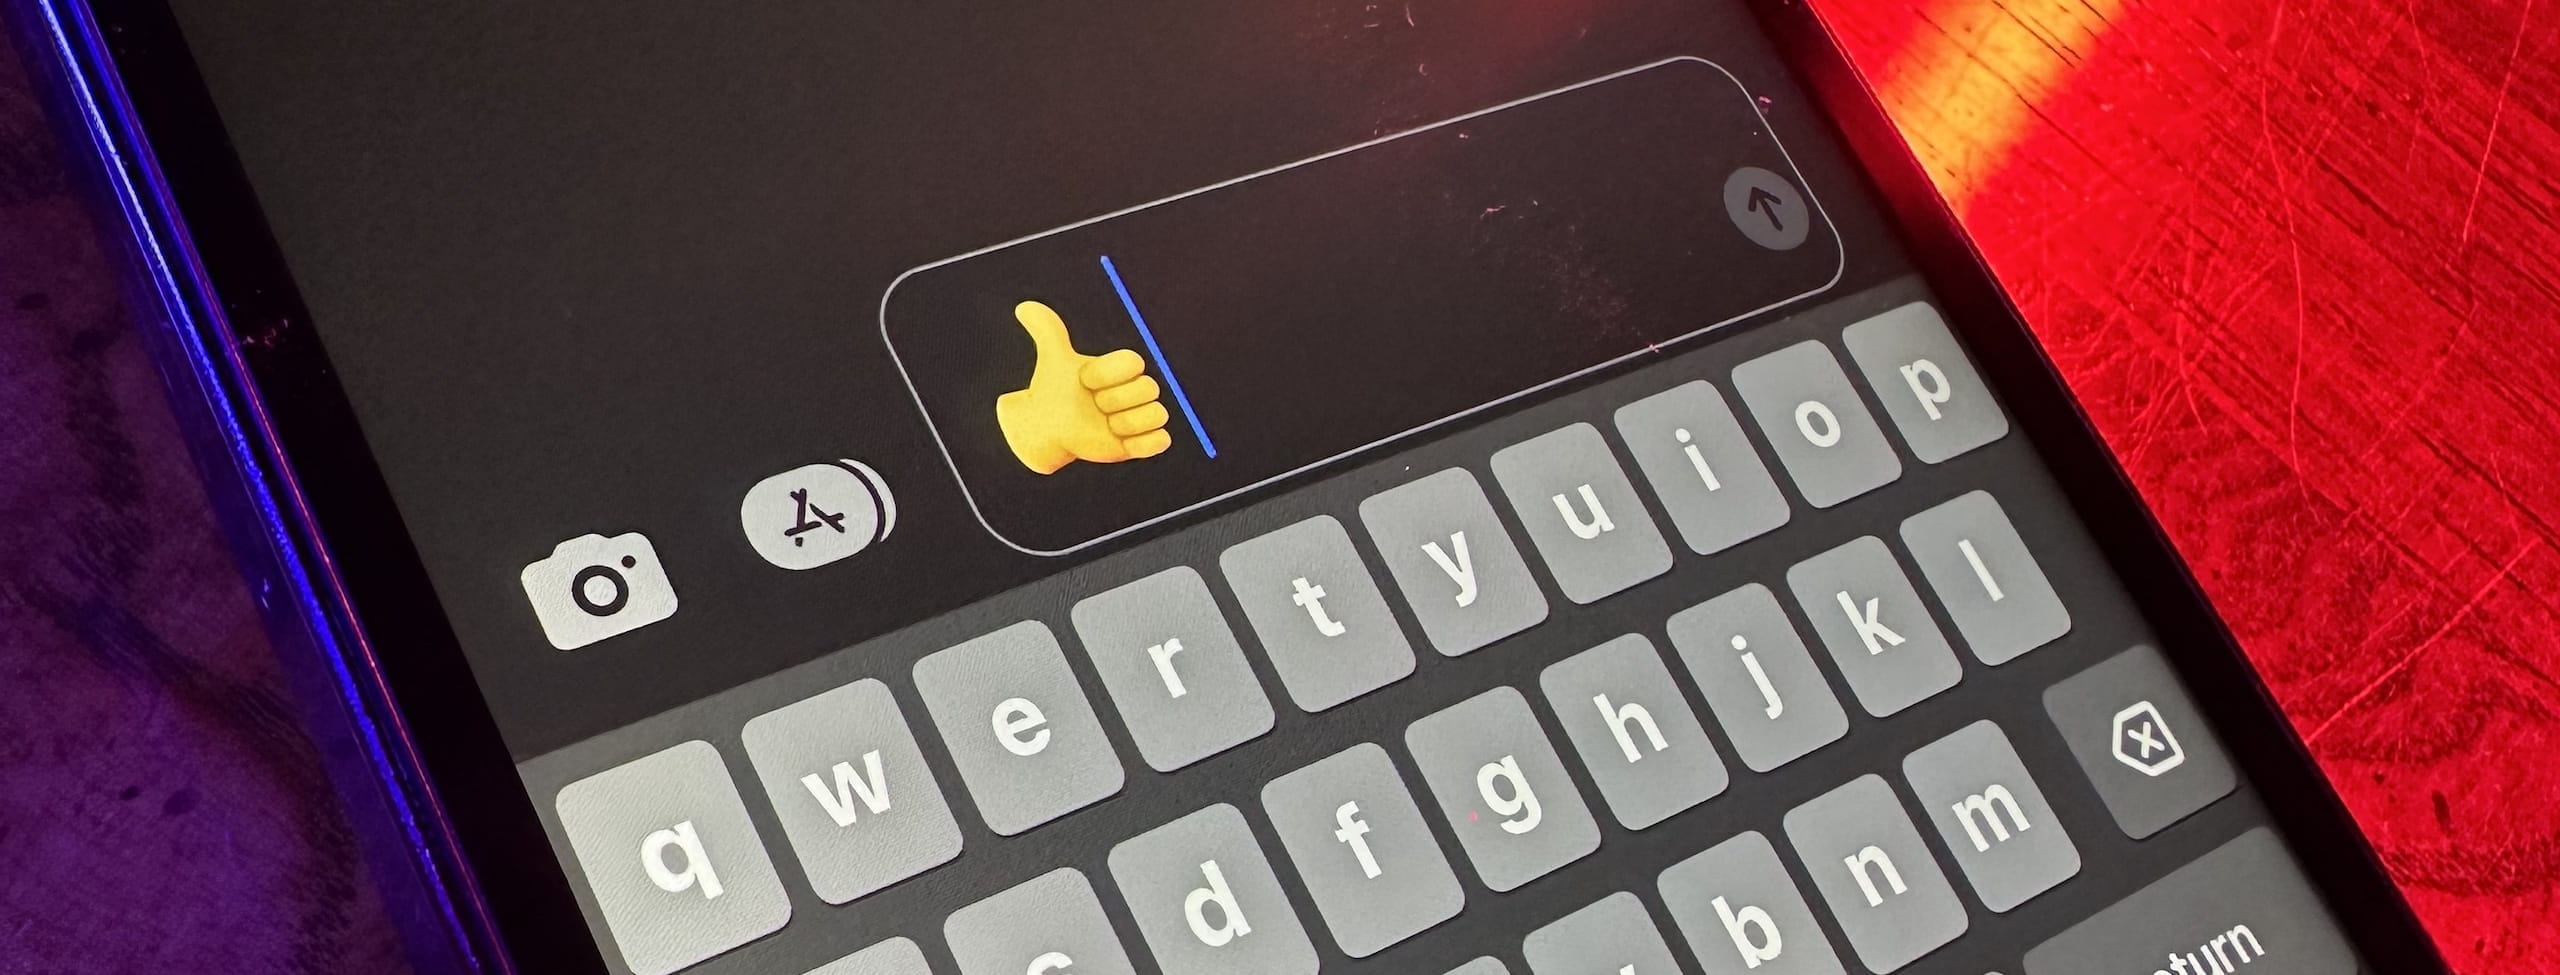 Phone with thumbs up emoji